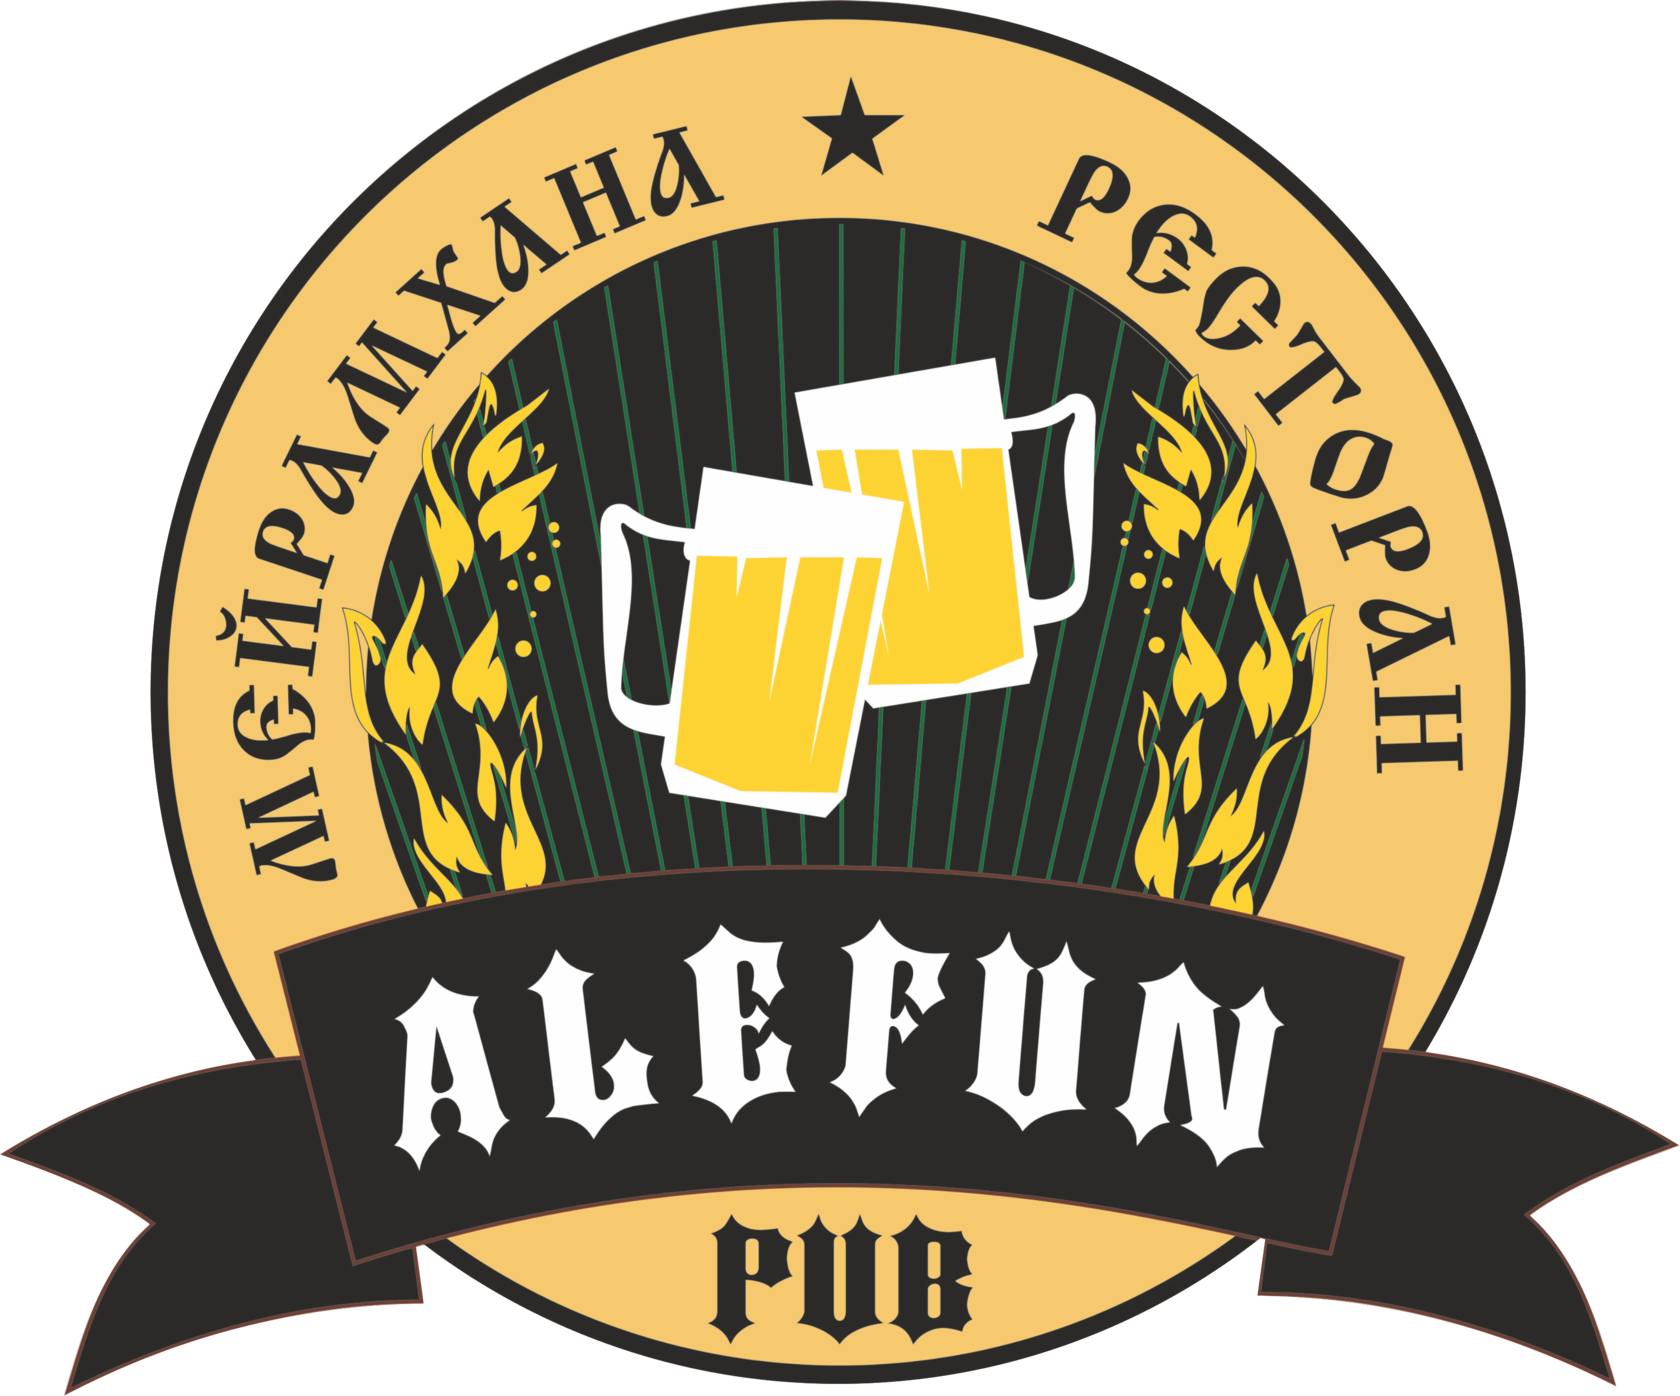  Alefun Pub 